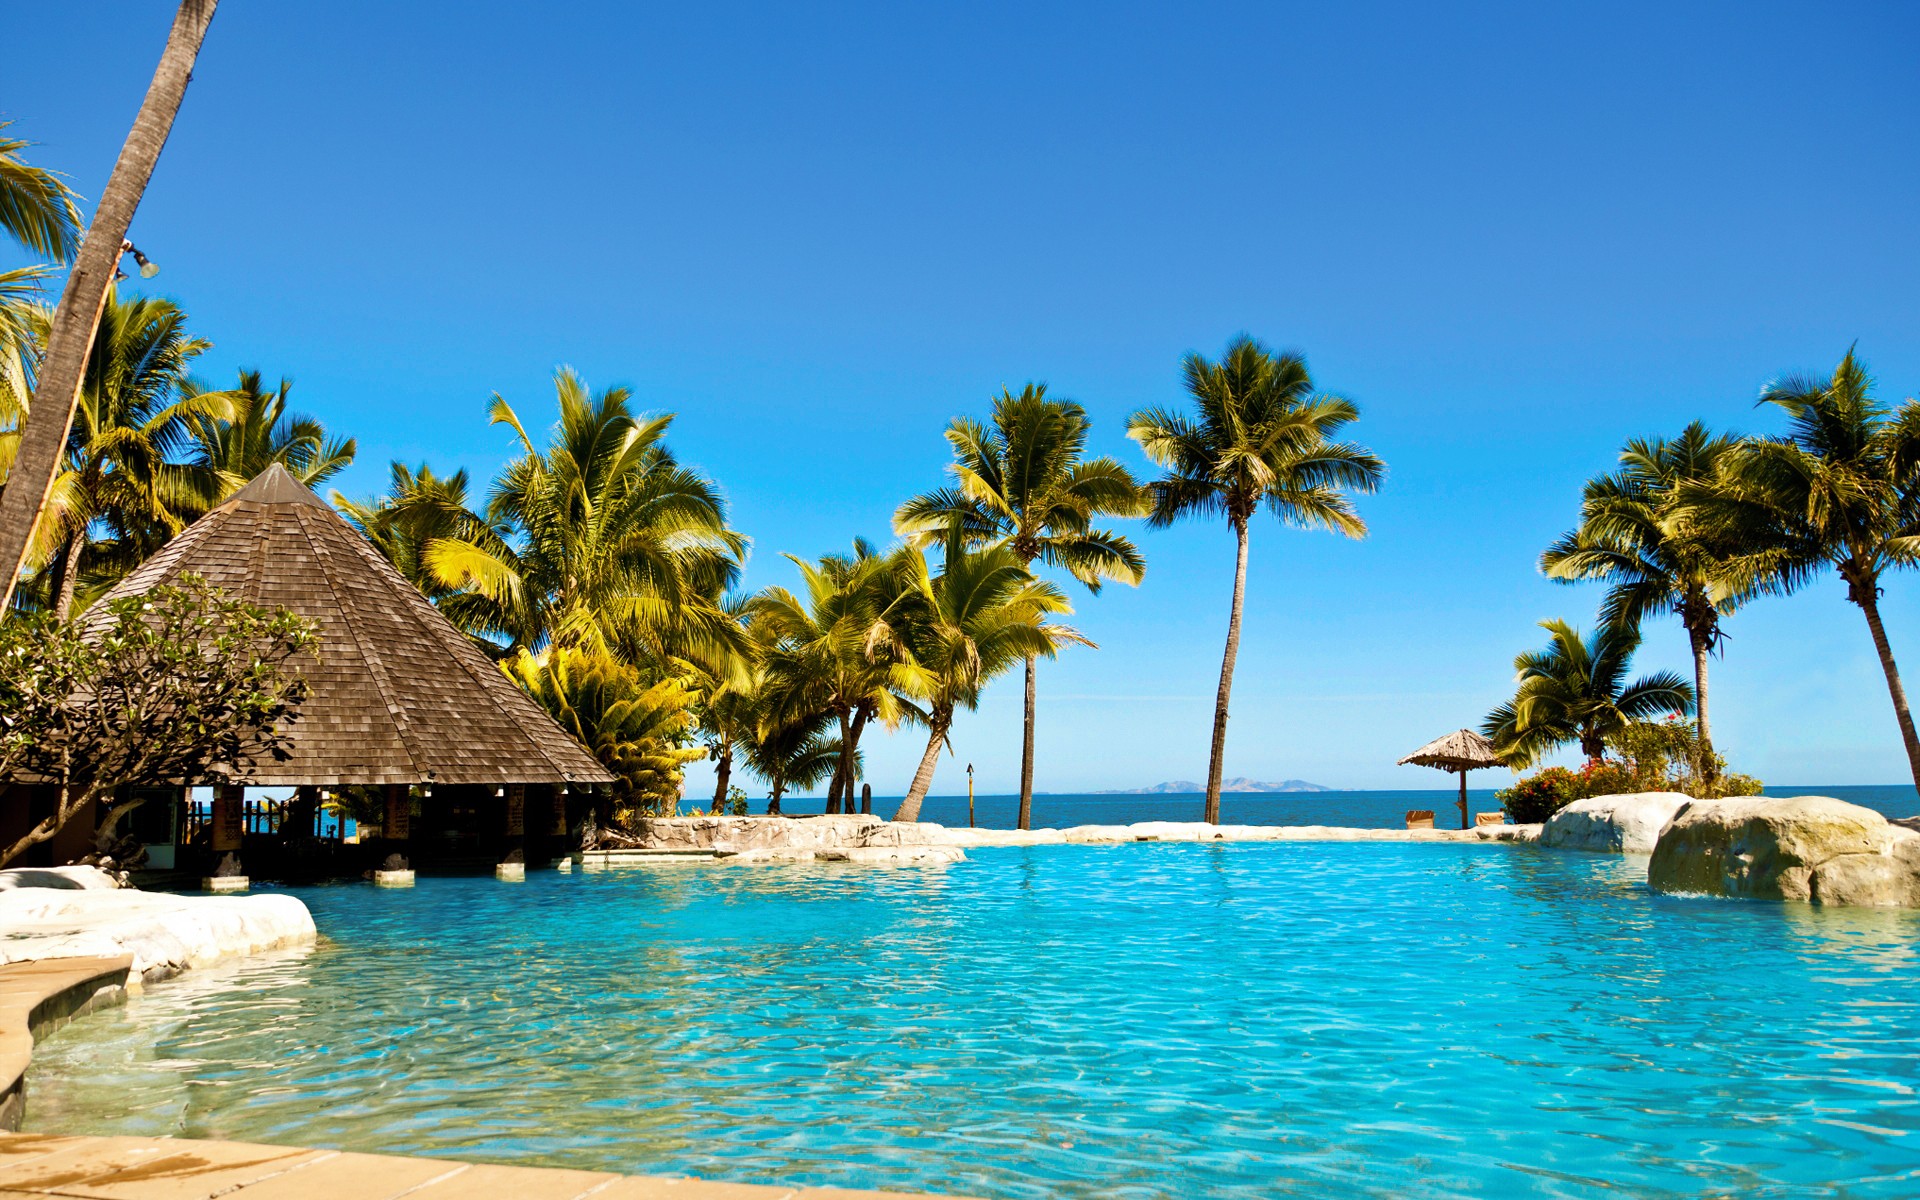 Pools Hotels Fiji Islands Resort Relaxation Sea Beaches Wallpaper